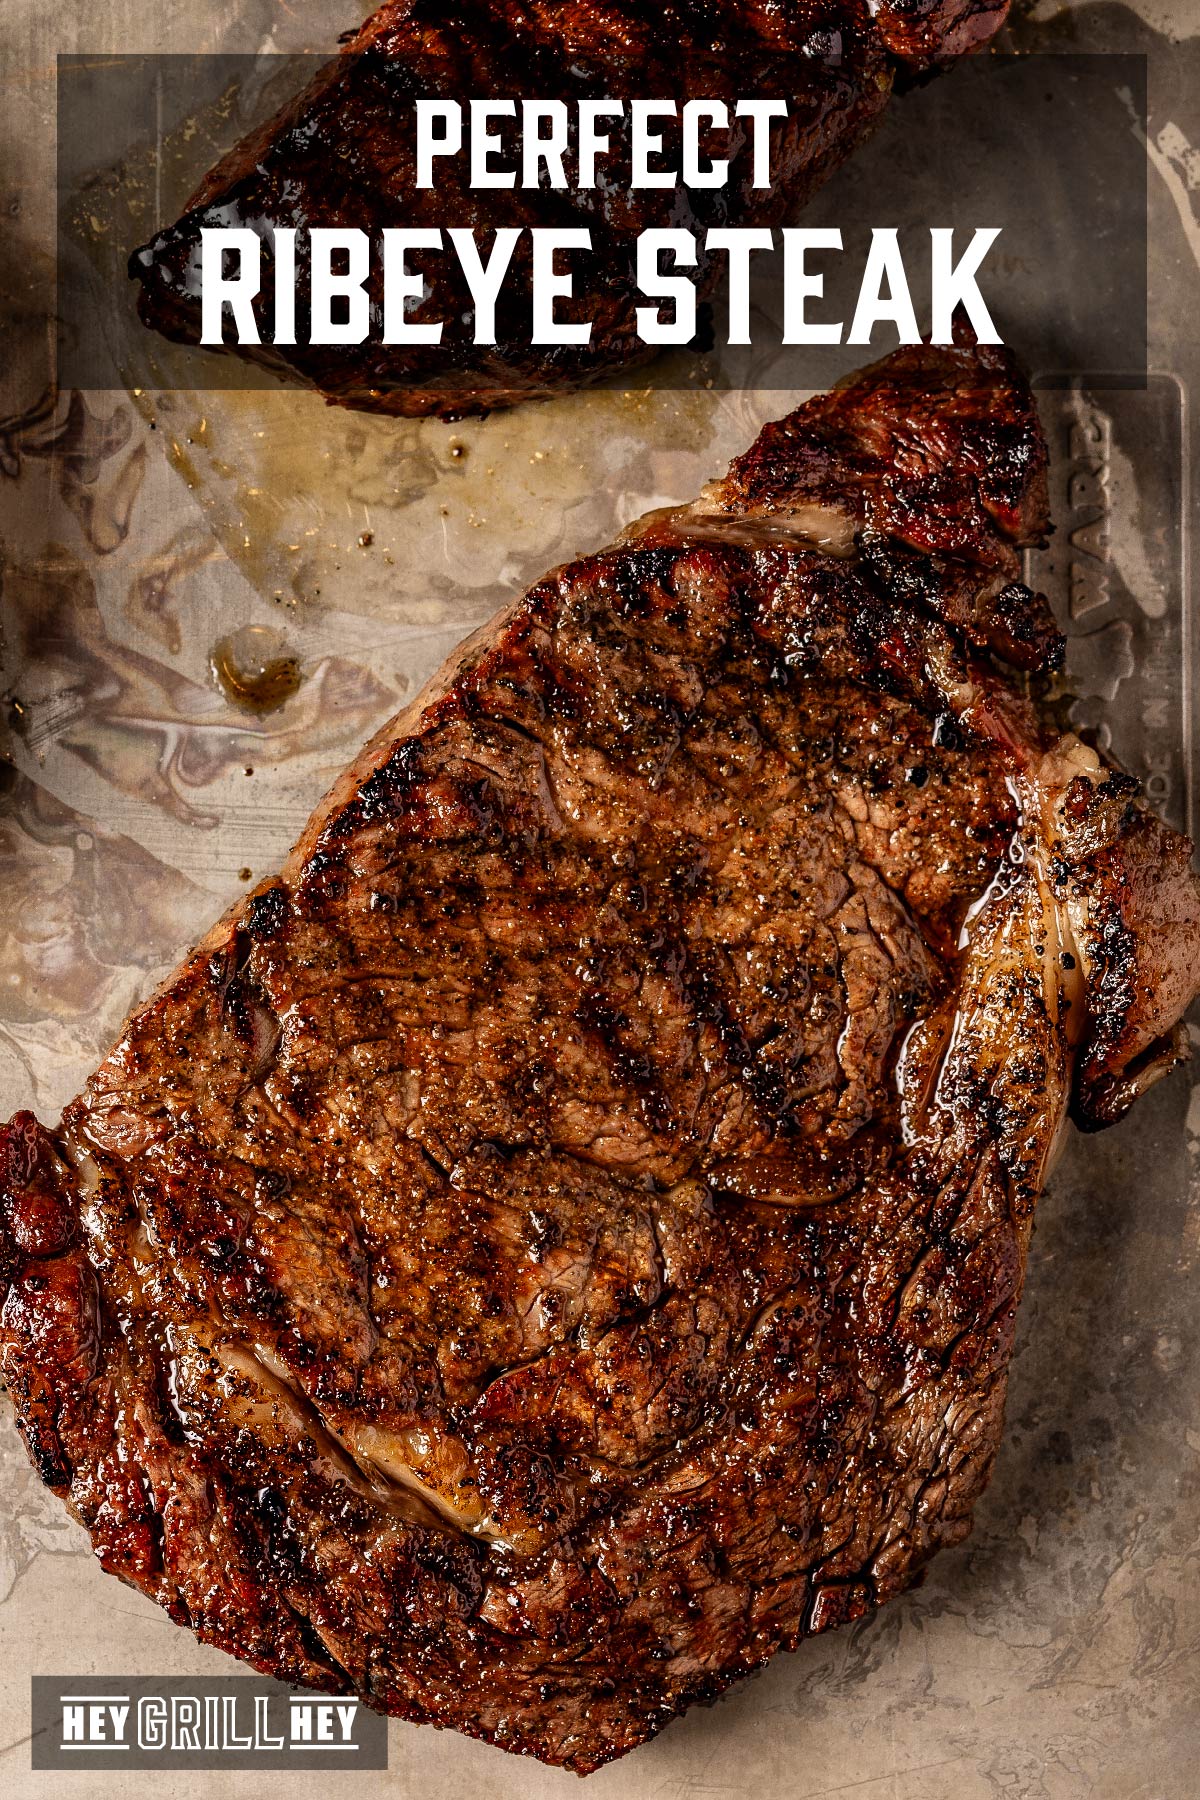 A grilled ribeye on a metal baking sheet. Text reads "Perfect Ribeye Steak".